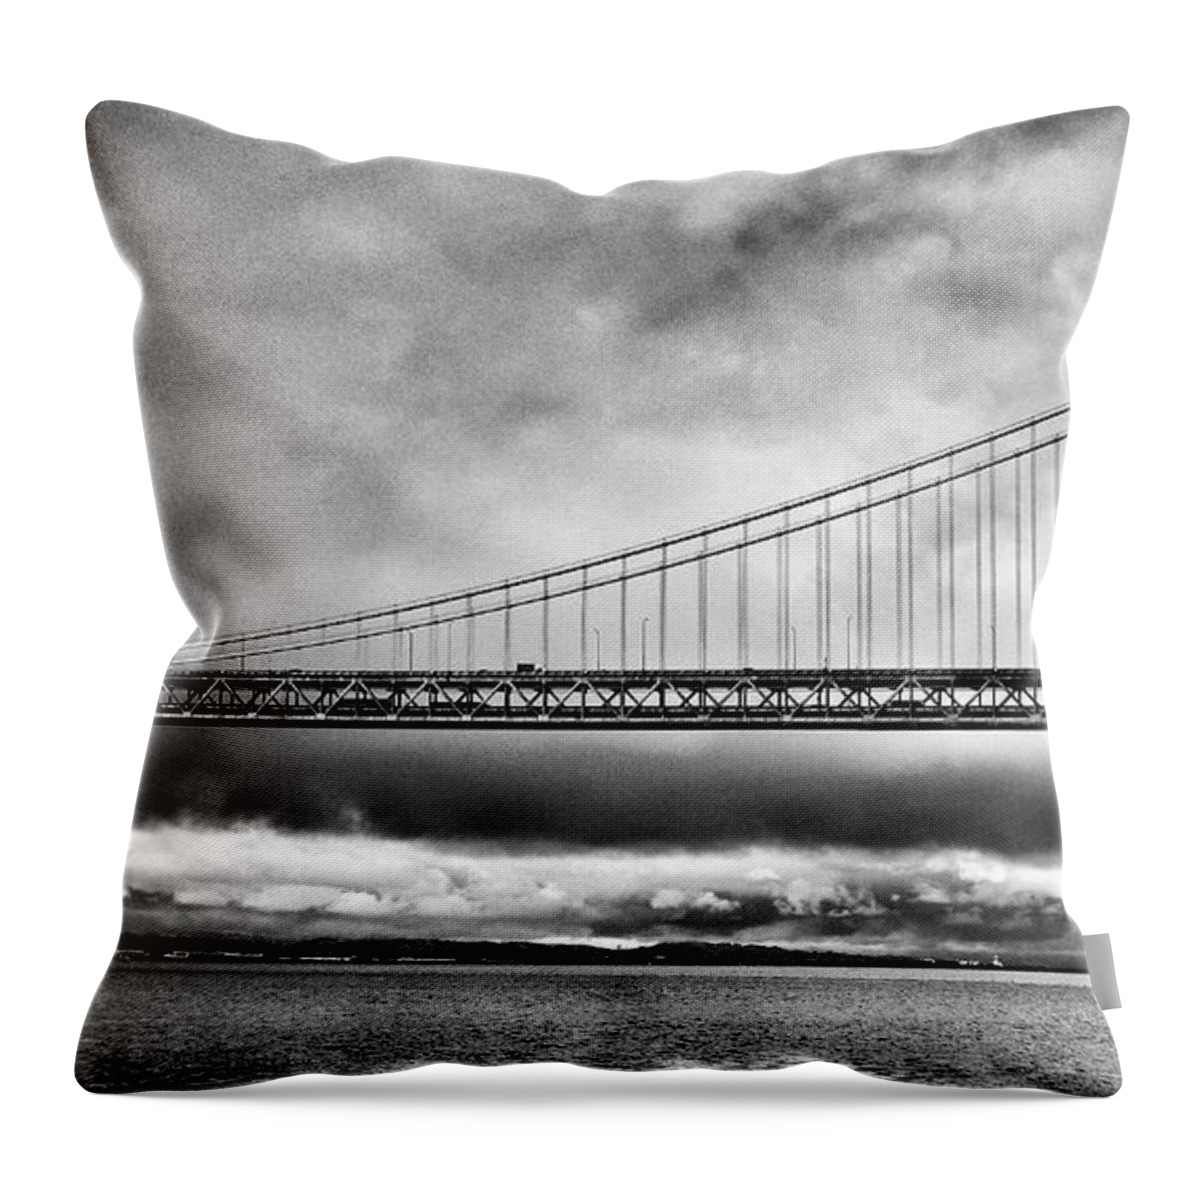 Bridge Throw Pillow featuring the photograph Bridge by Al Harden